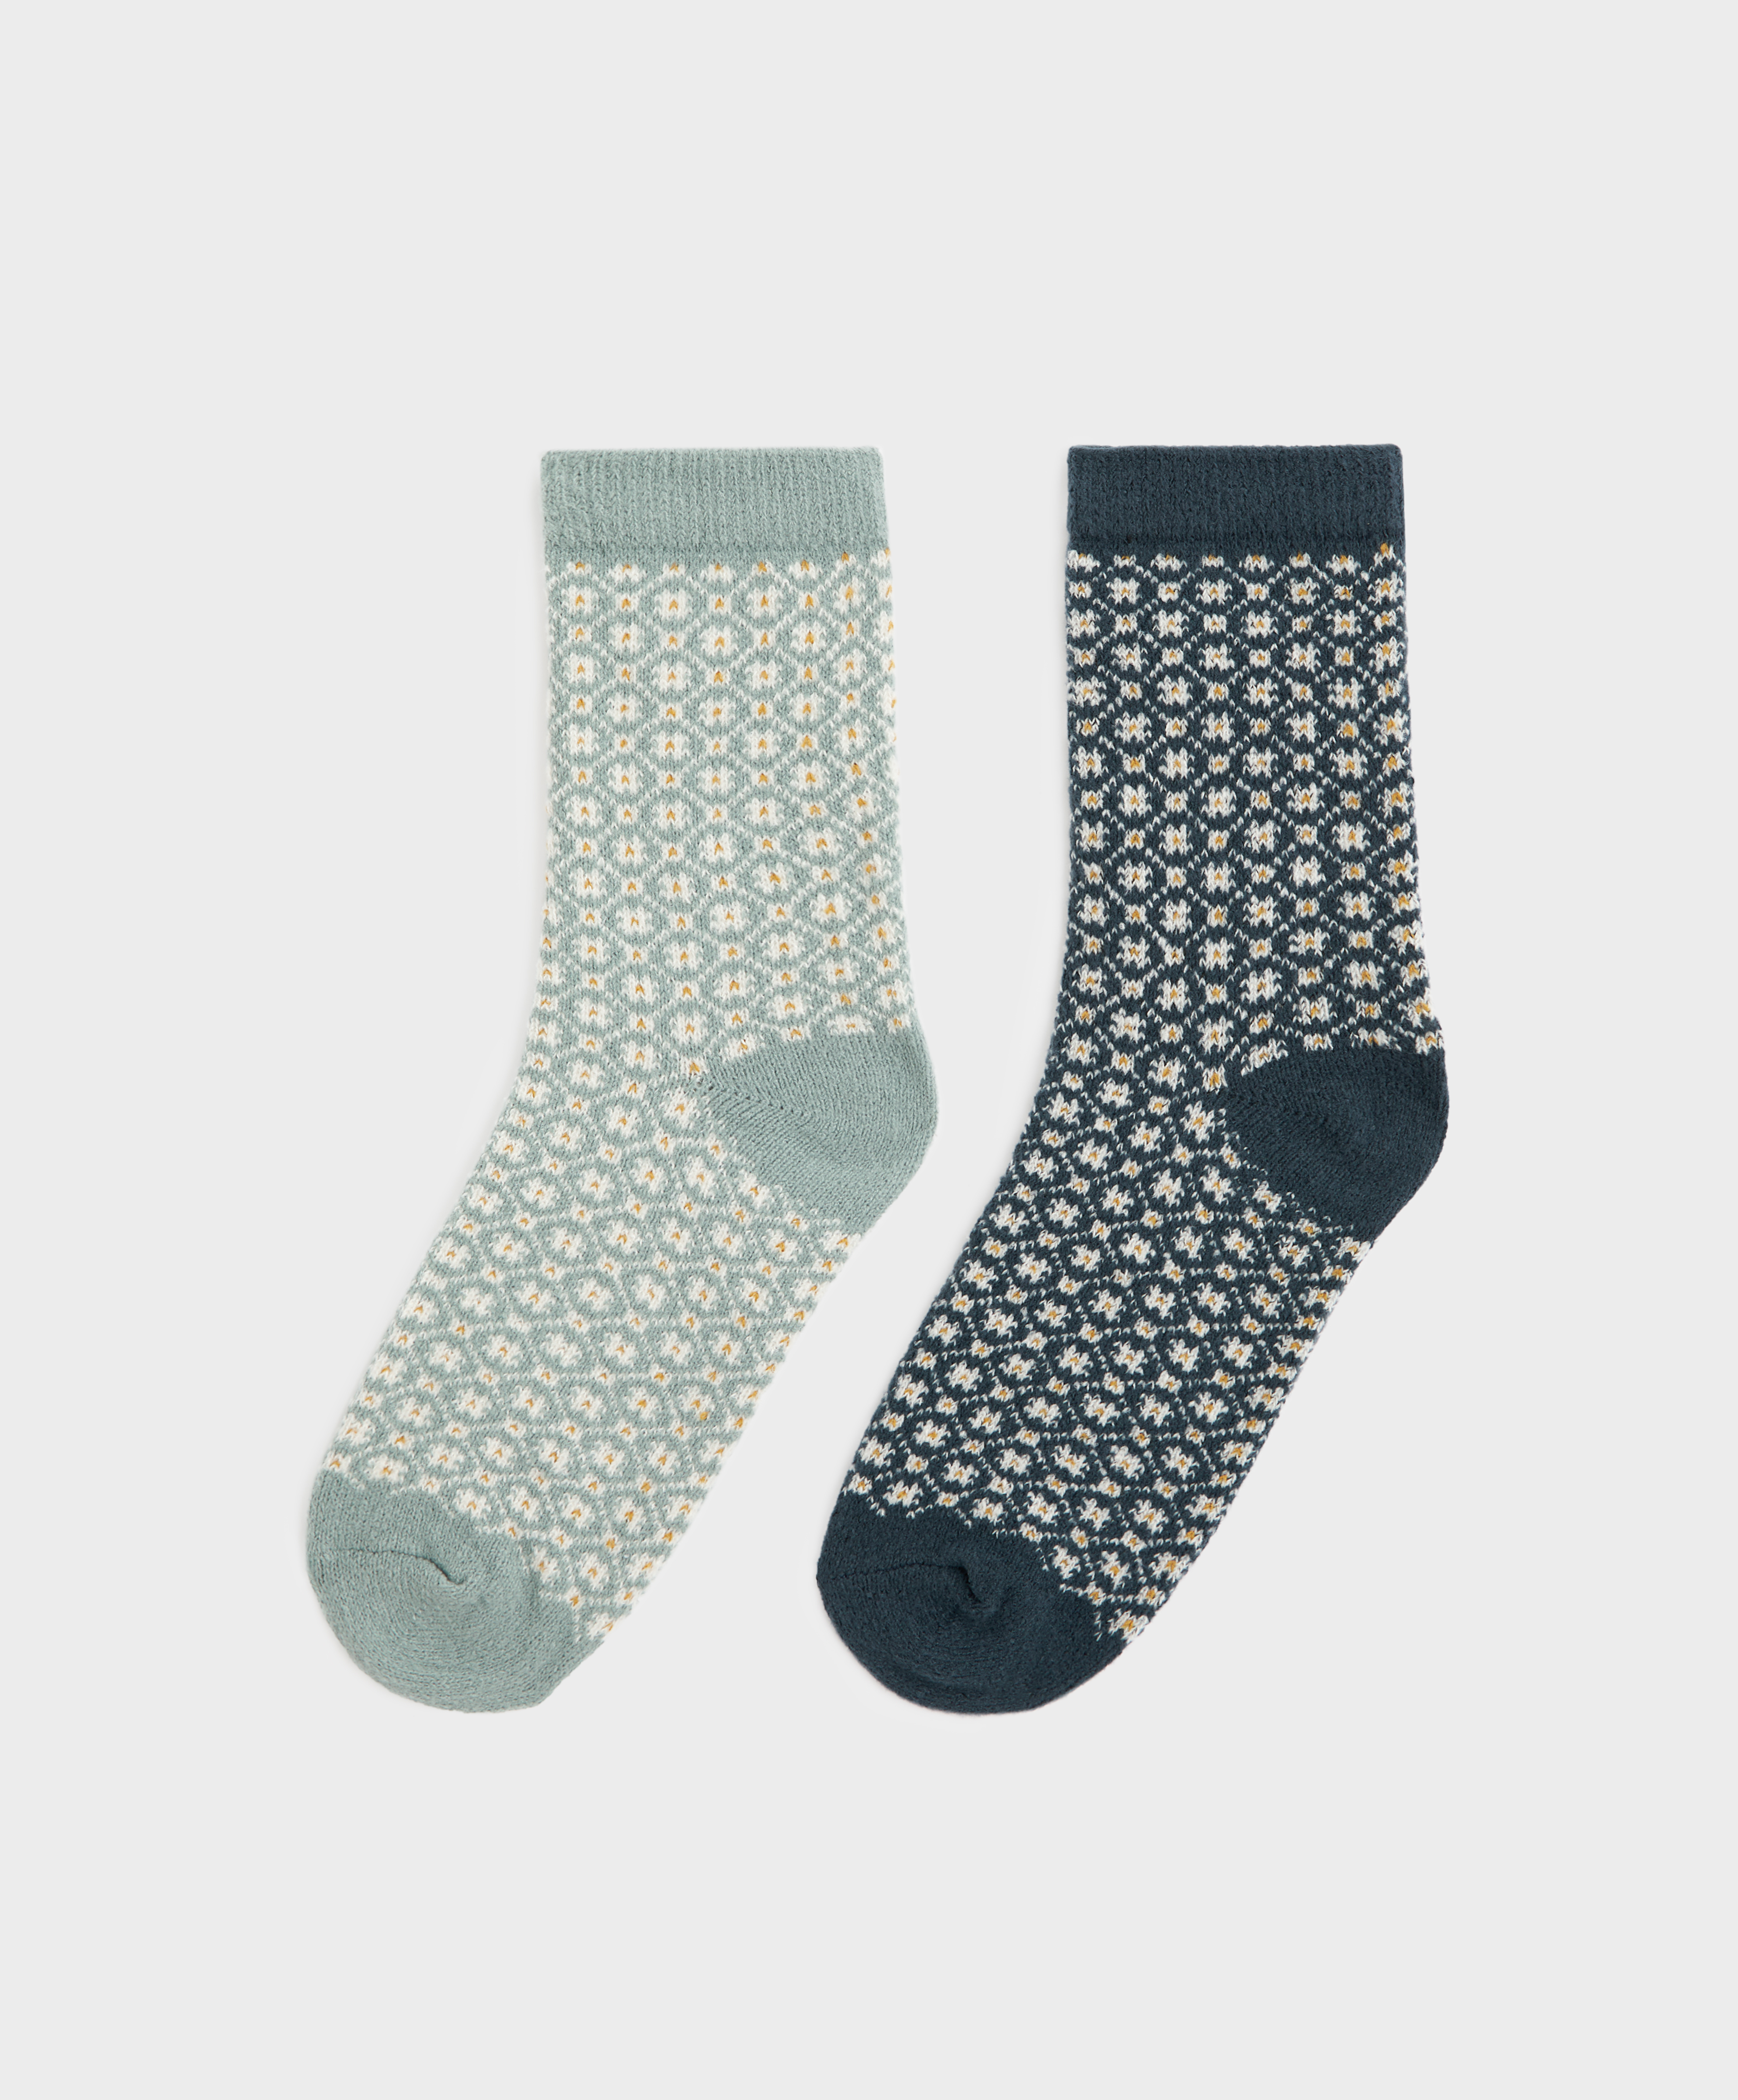 2 pairs of classic socks